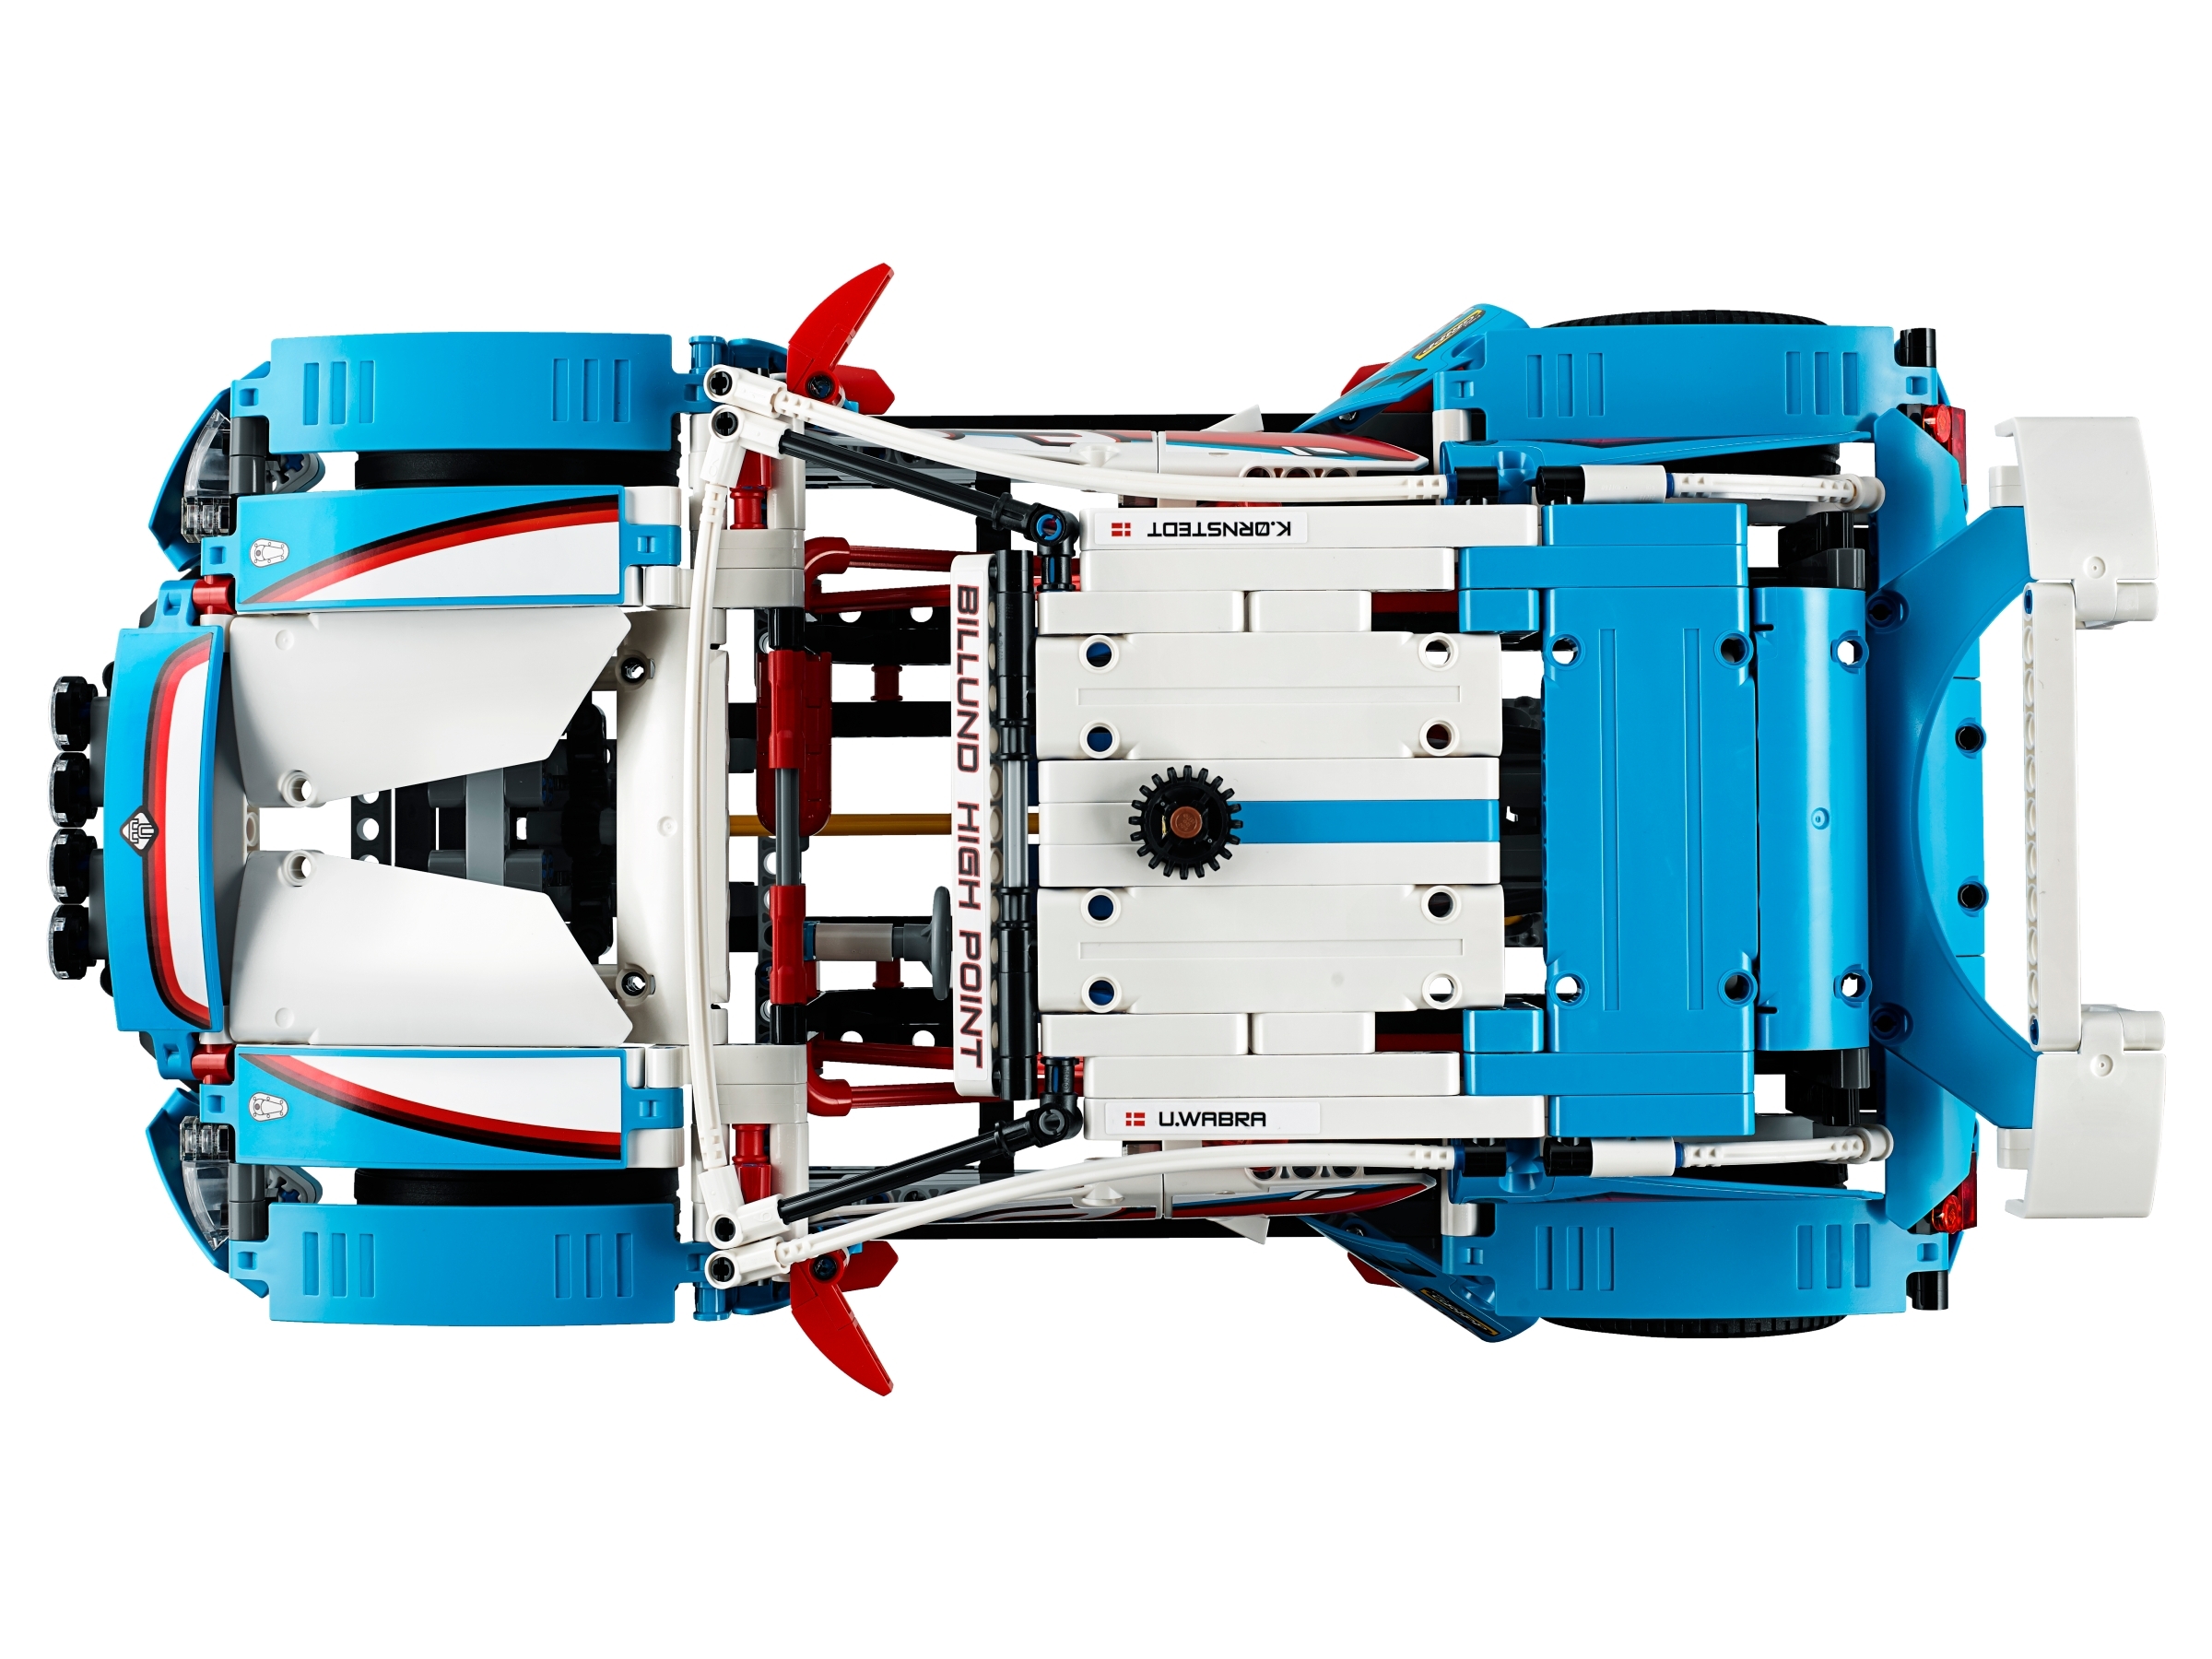 Lego Technic ® ™ 42077 rally auto nuevo New OVP misb